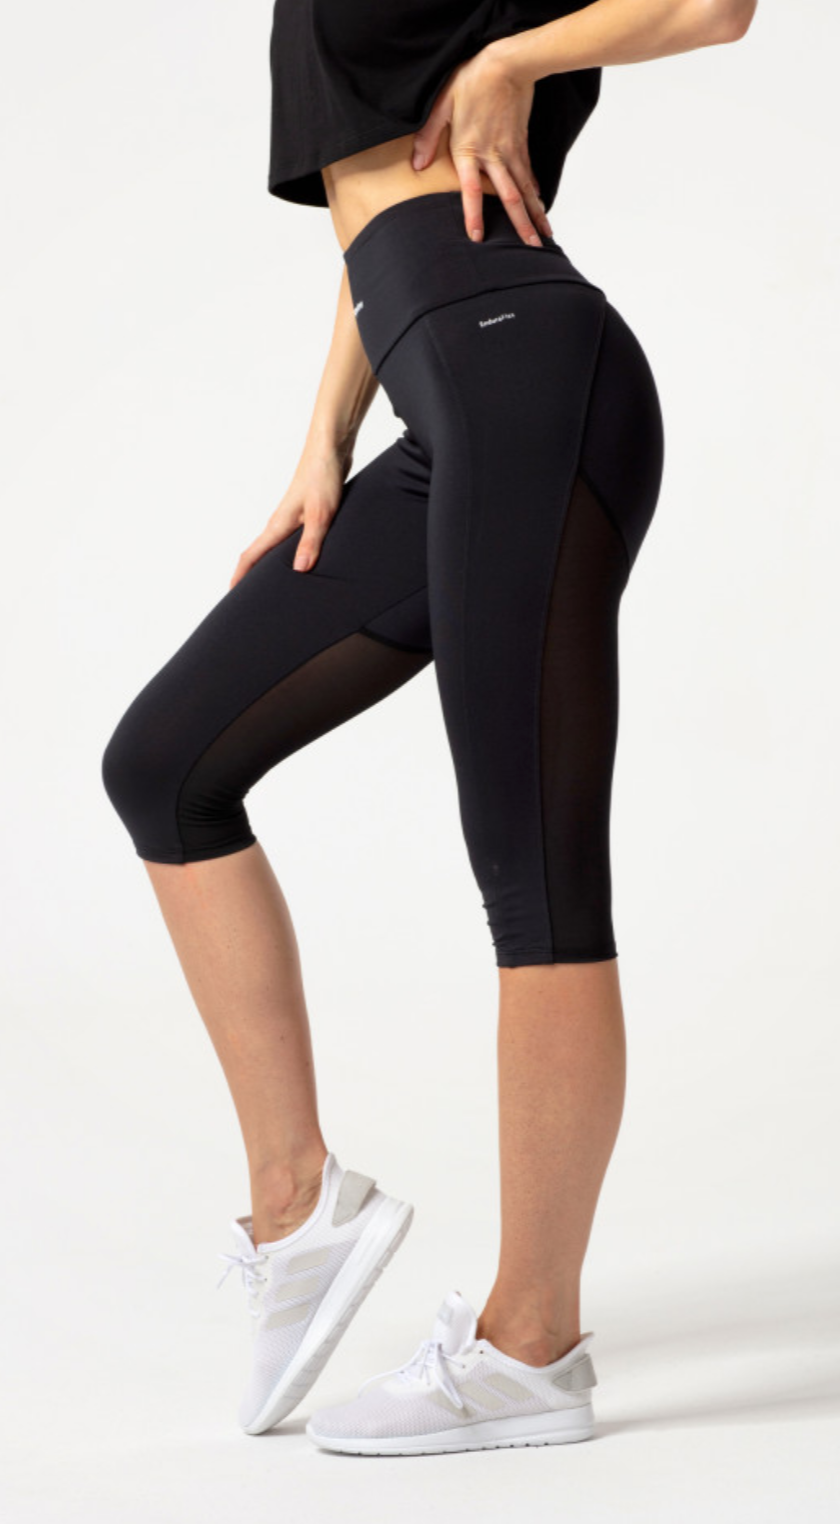 Carpatree Hyperion Tulle Capri Leggings - Black high waisted 3/4 length leggings with mesh panels at the back of the legs.